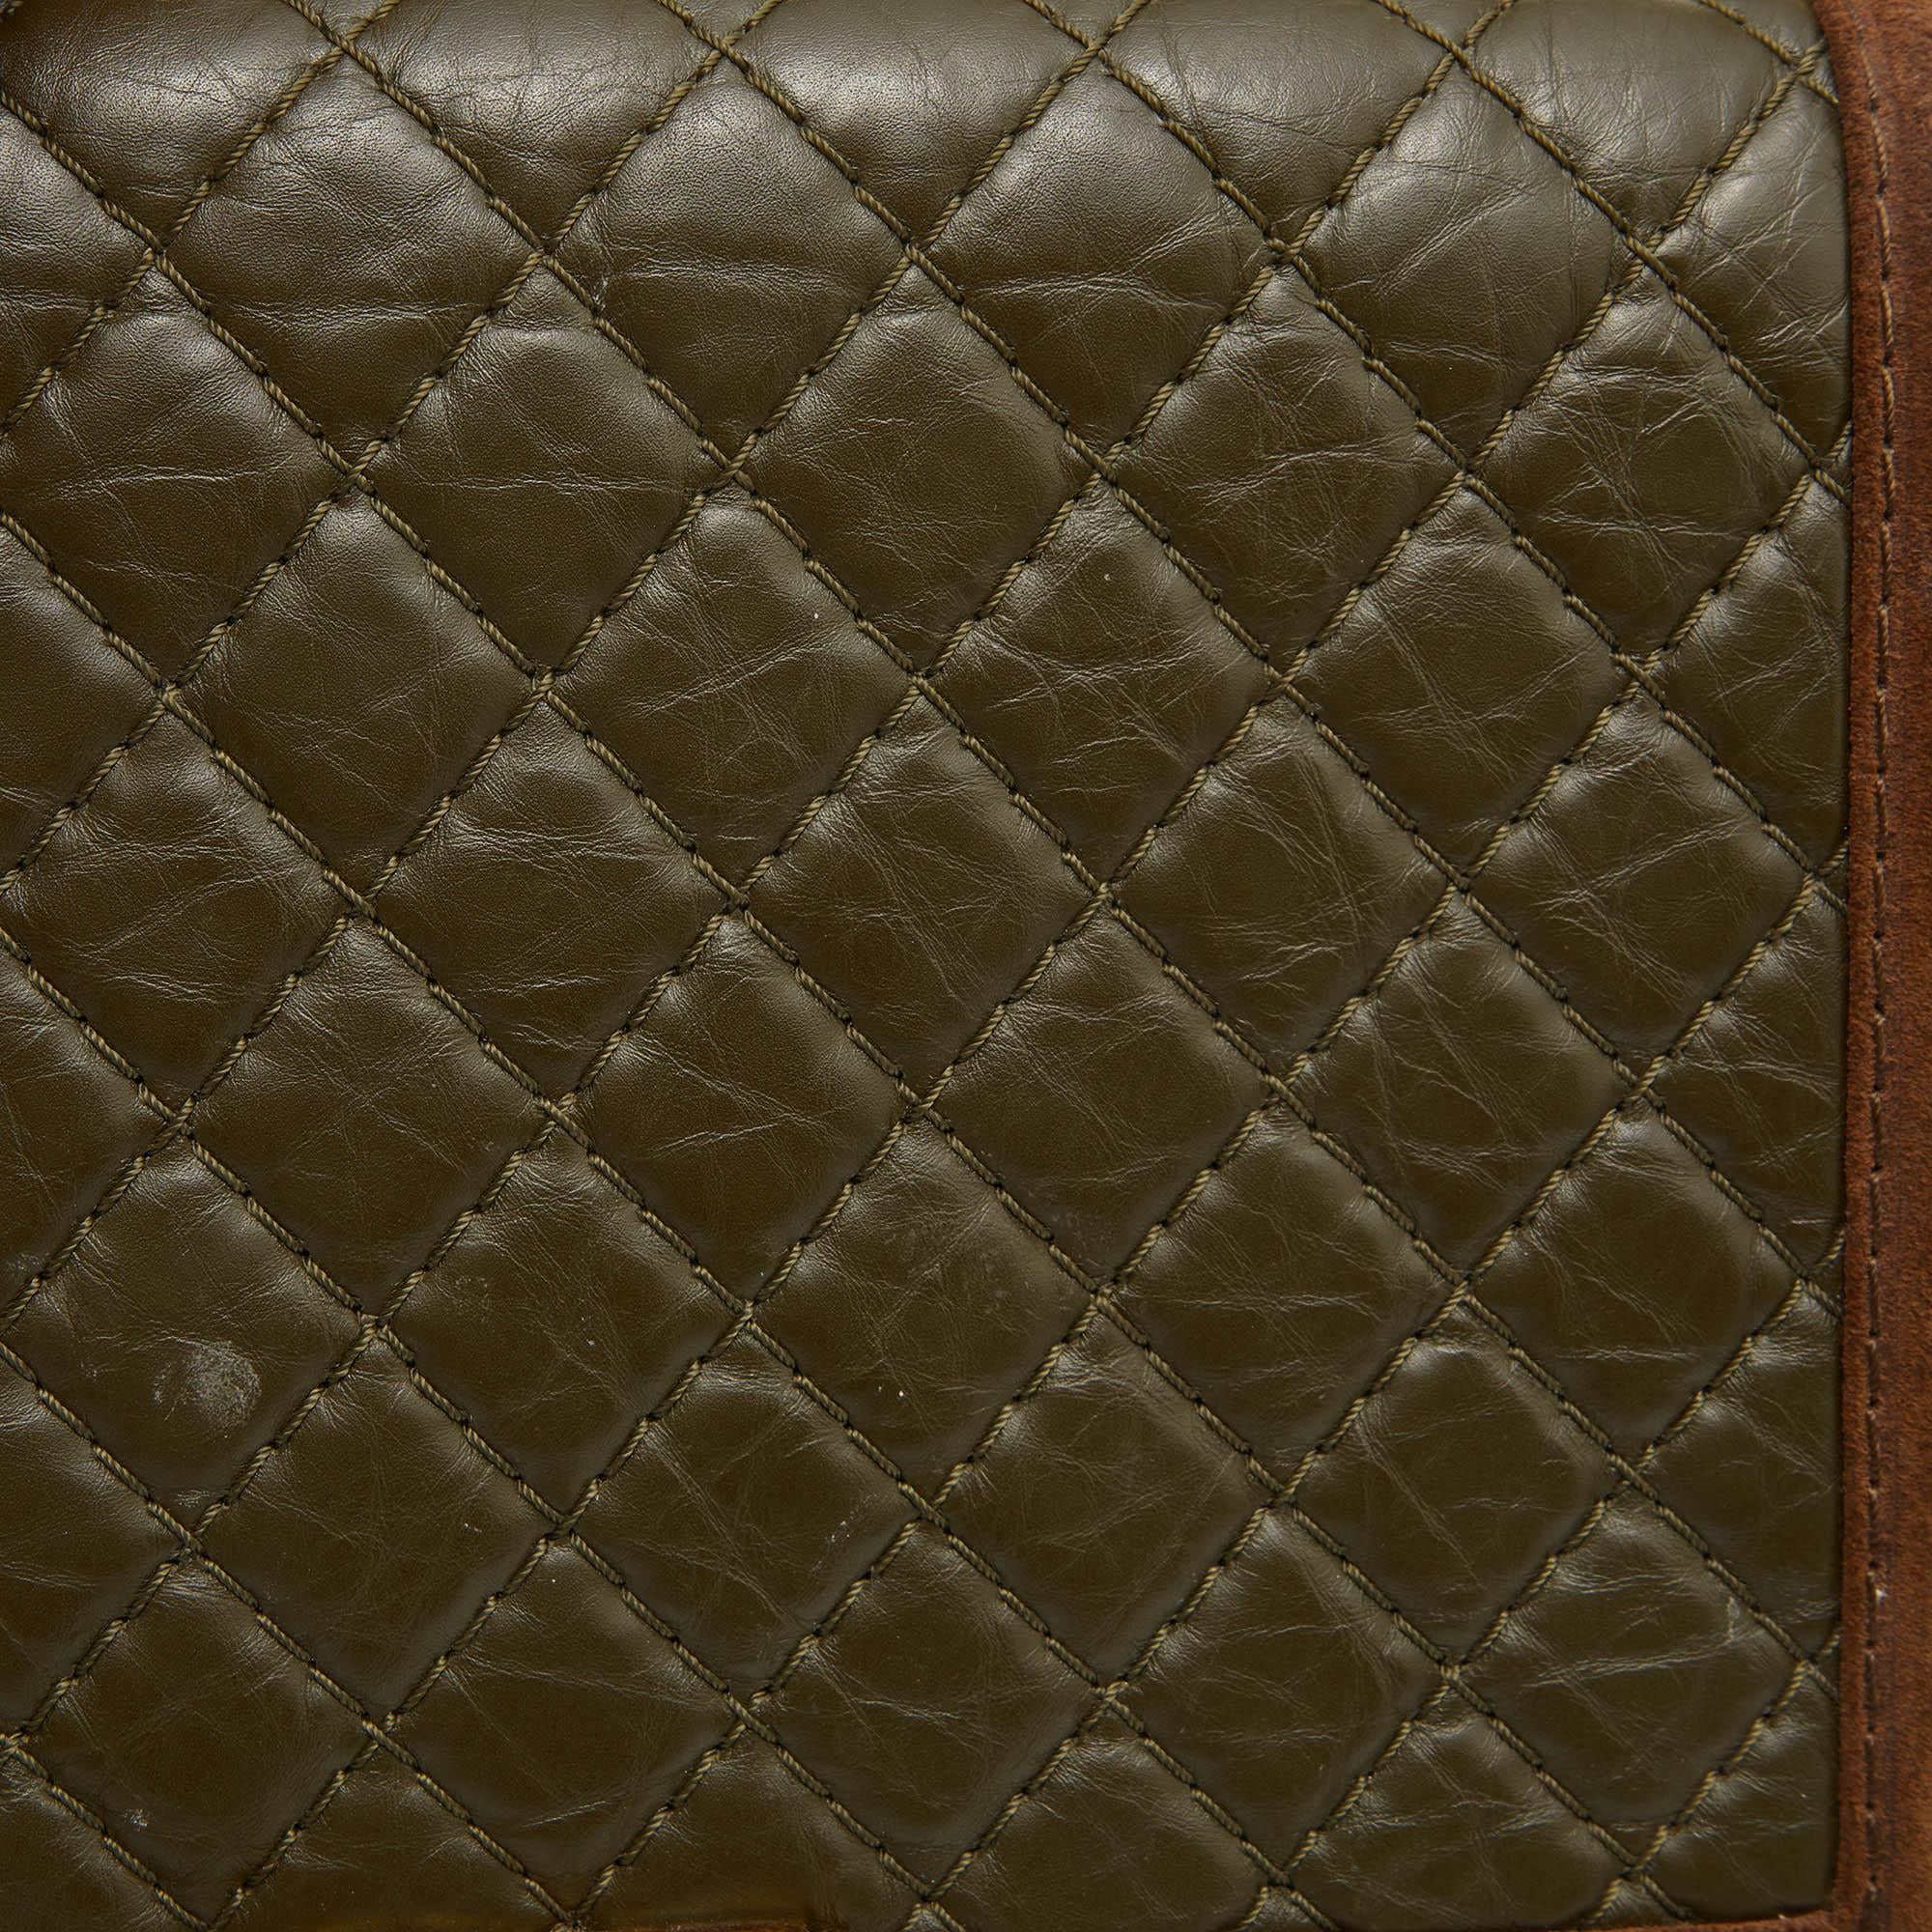 Chanel Brown/Olive Green Quilted Leather Paris-Edinburgh Large Boy Bag 2